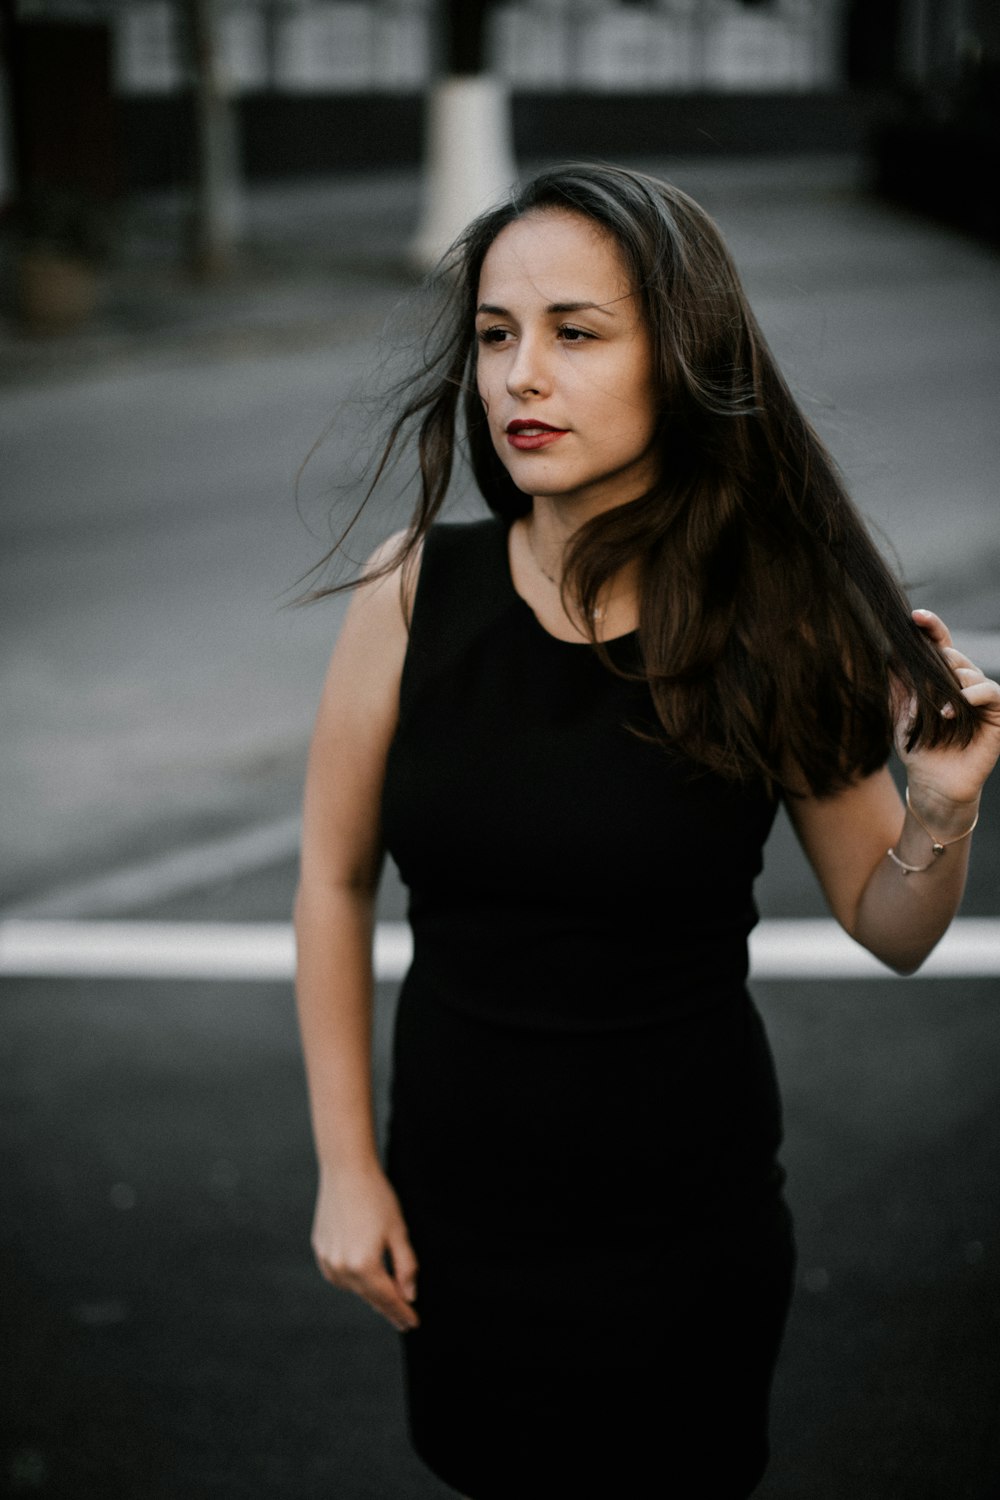 focus photo of woman in black sleeveless dress walks on road